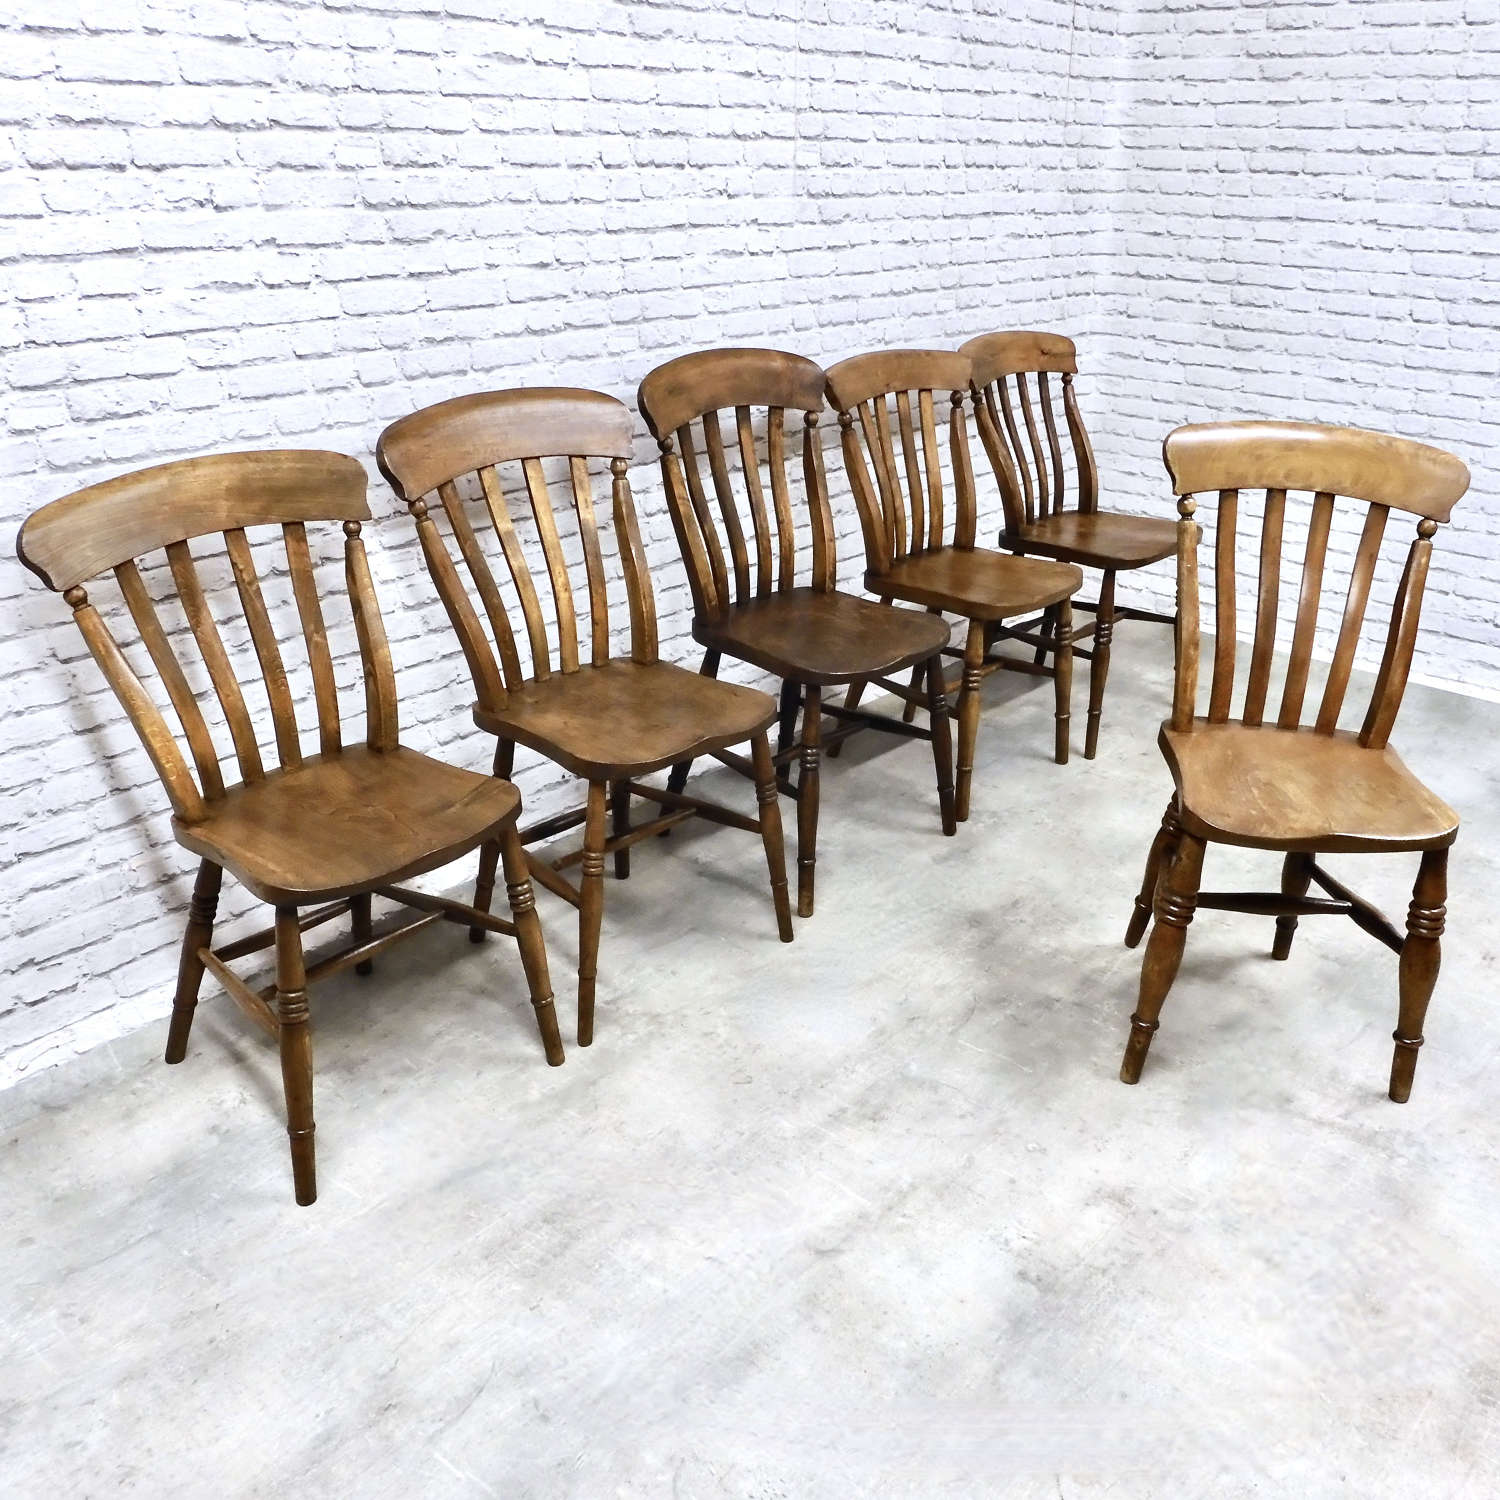 6x Antique Windsor Kitchen Chairs